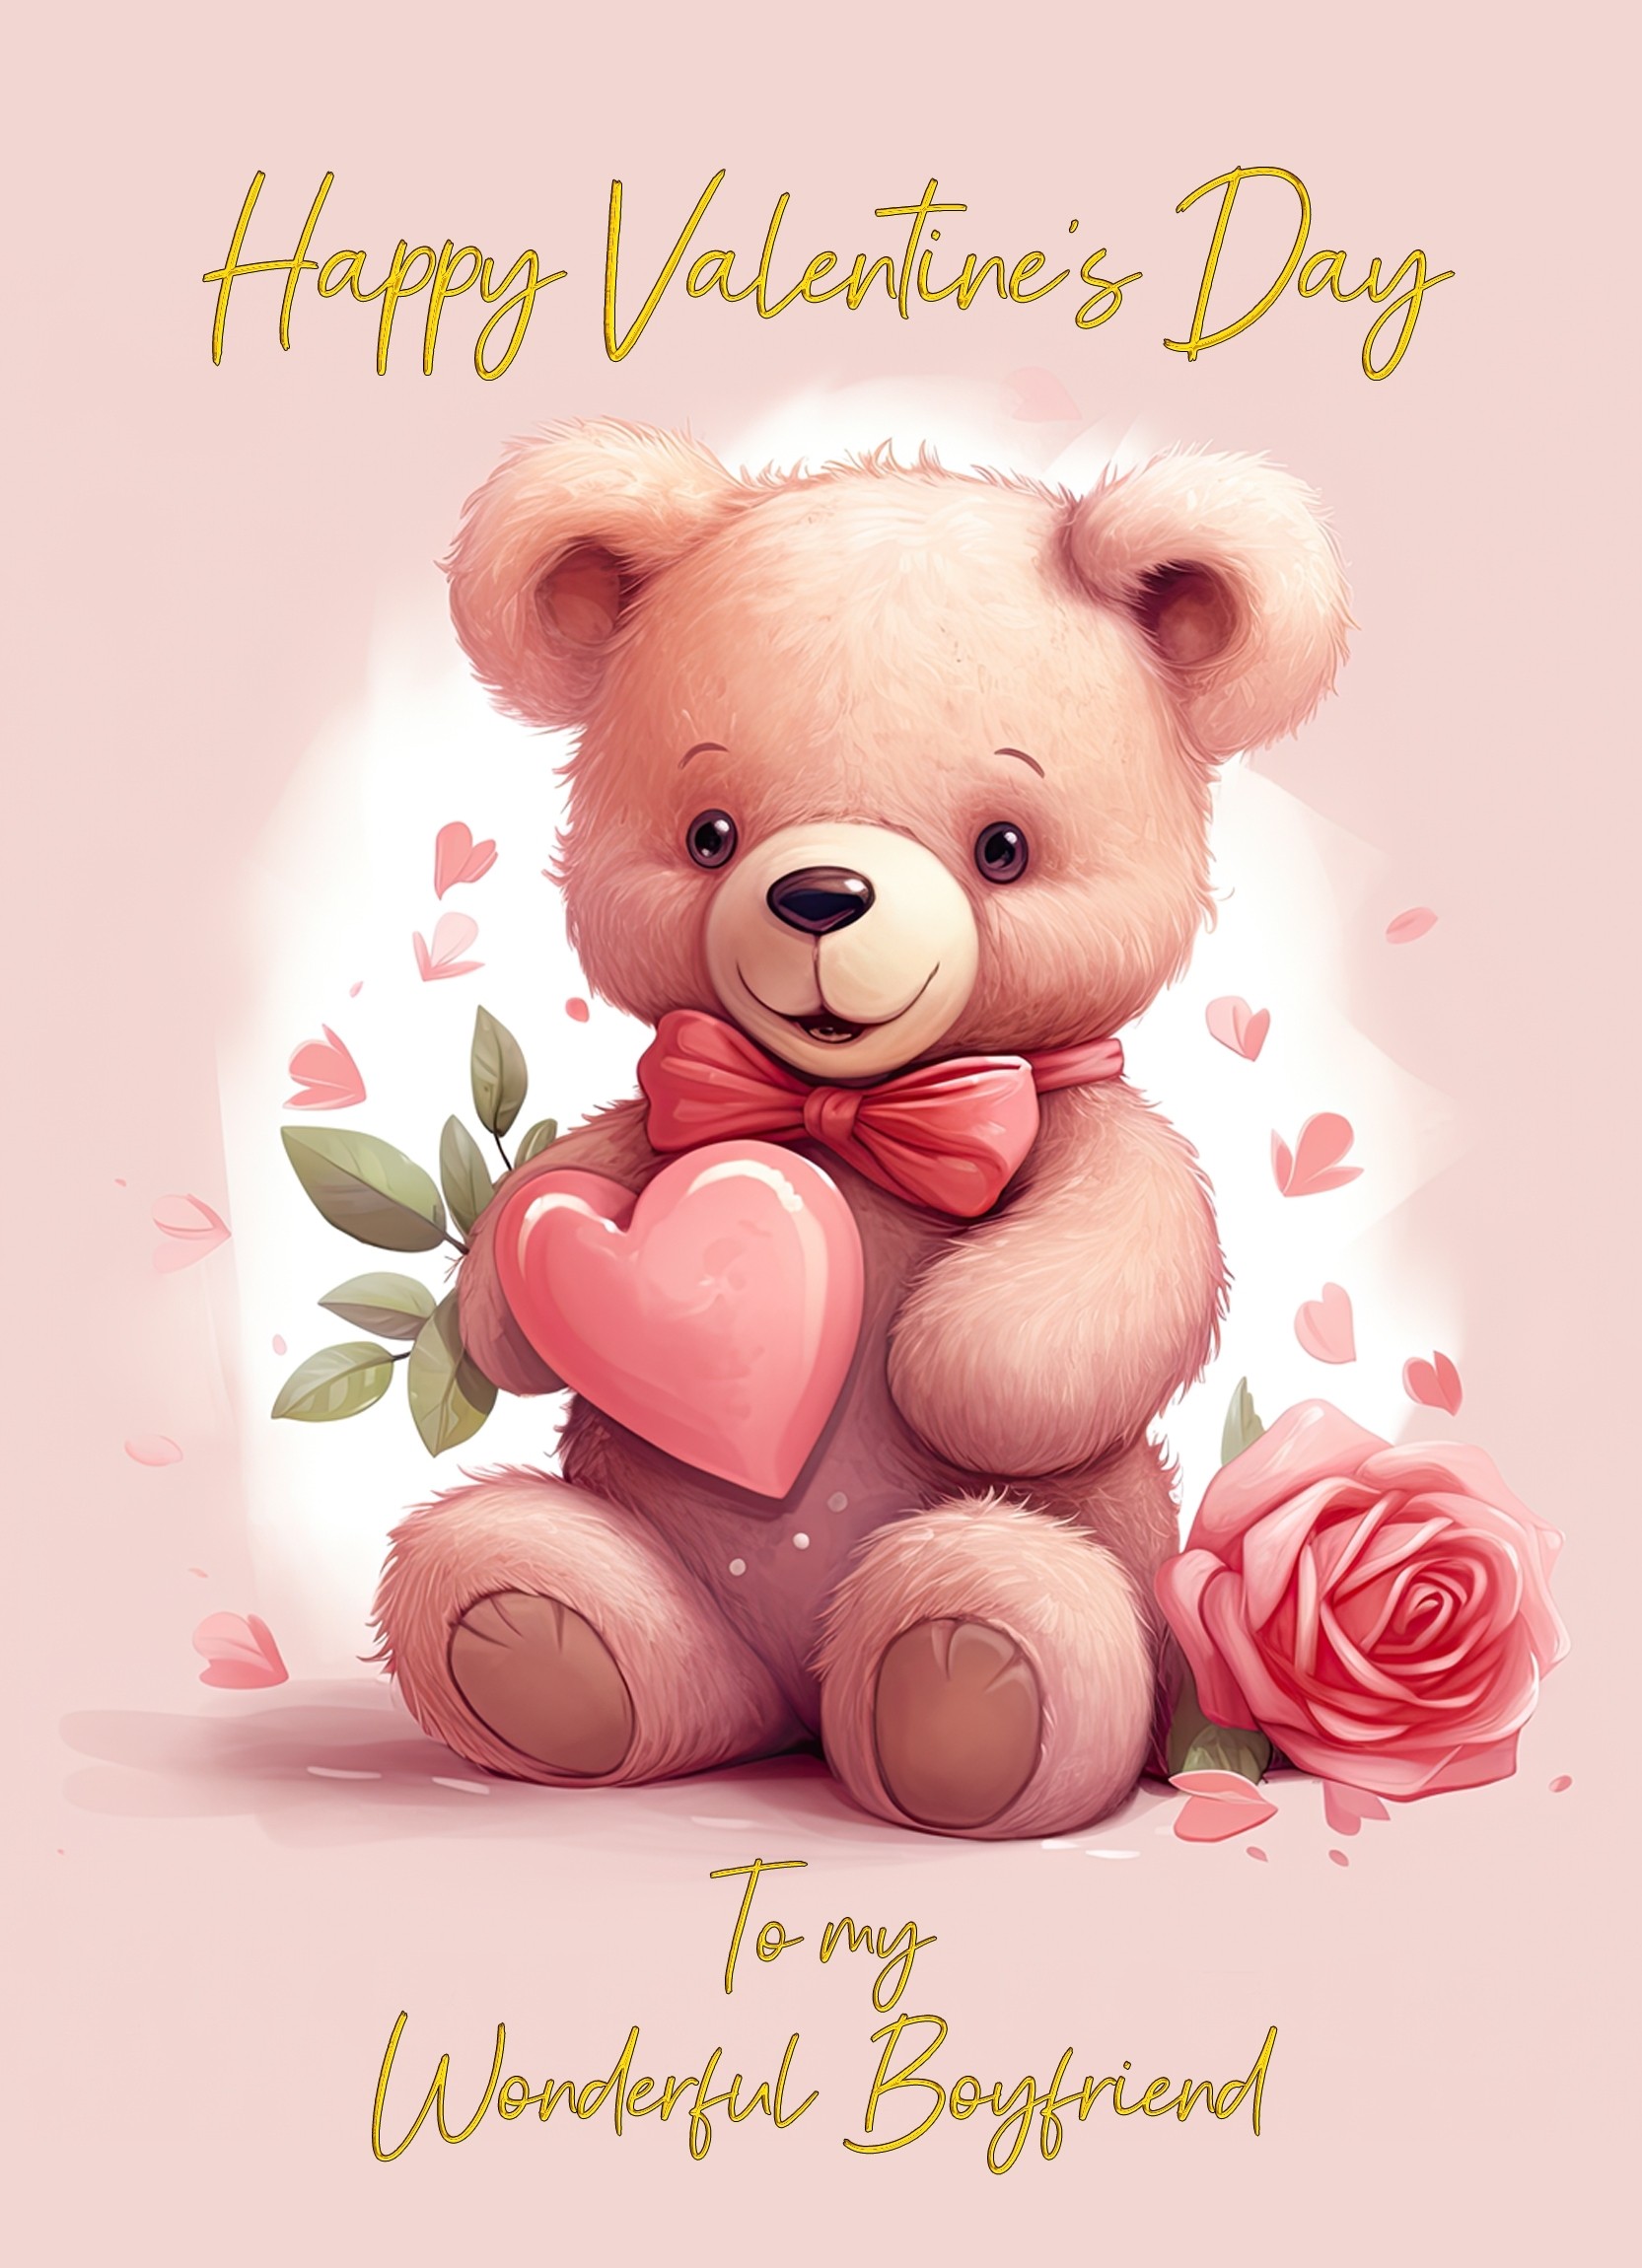 Valentines Day Card for Boyfriend (Cuddly Bear, Design 4)